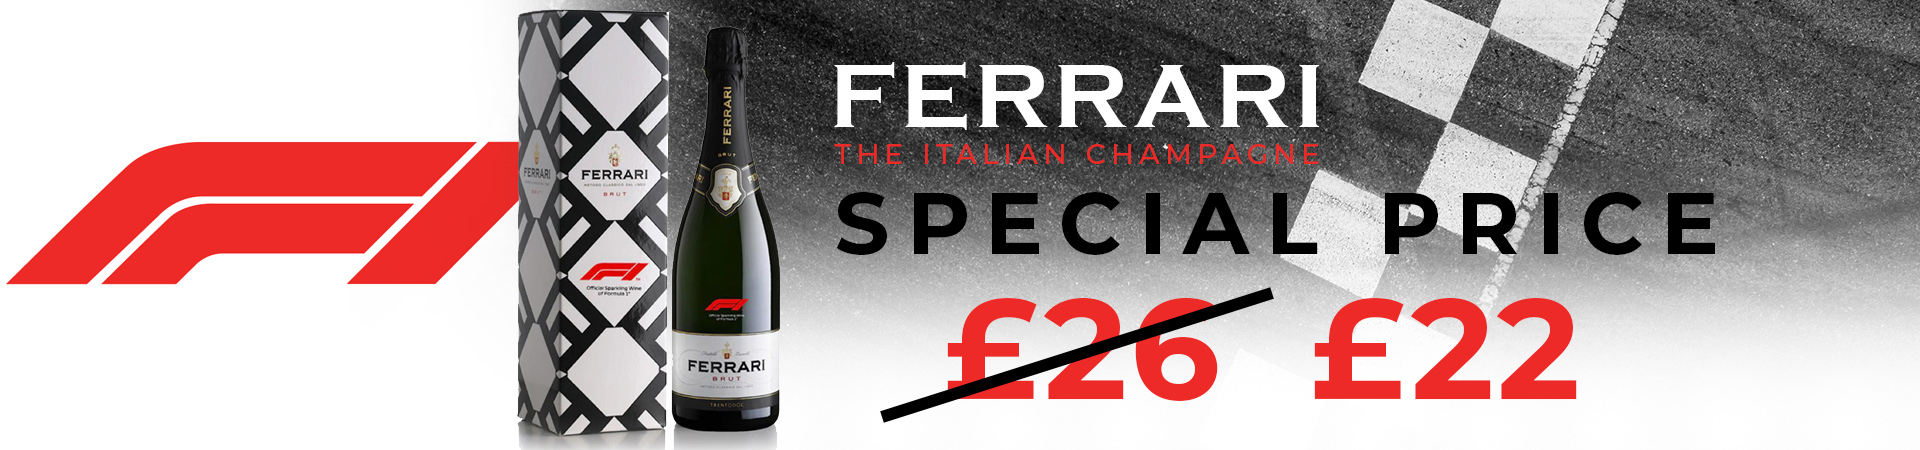 Ferrari Brut on sale